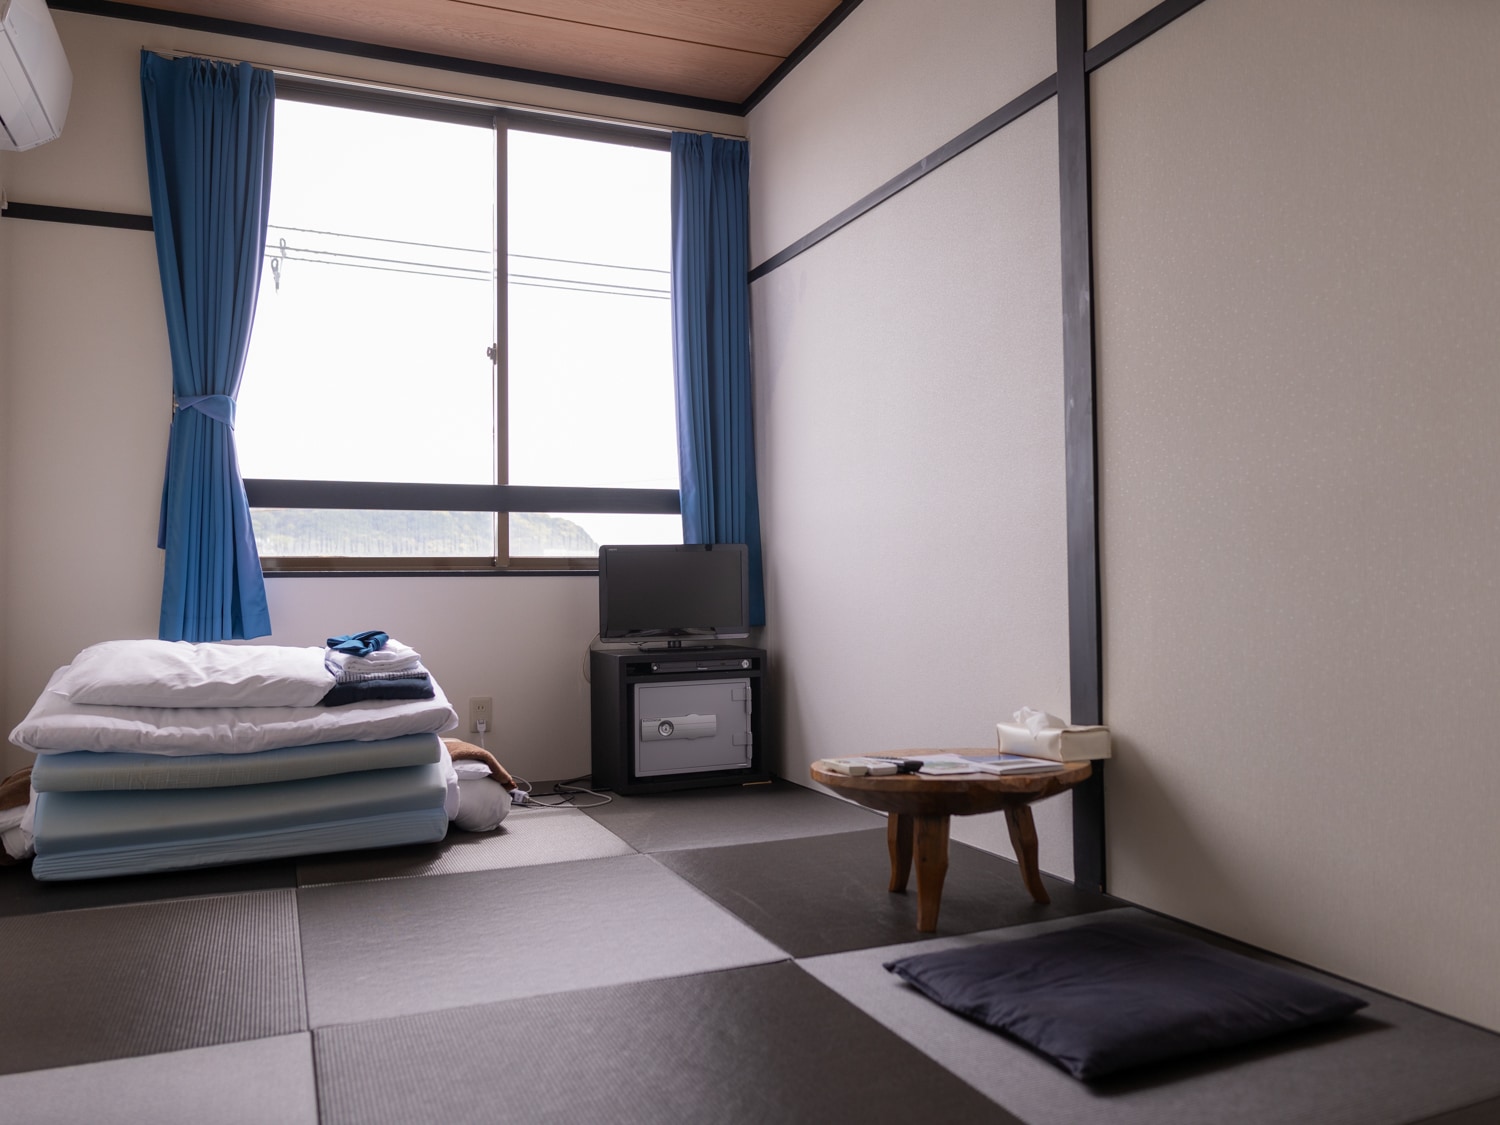 Japanese-style room 5 tatami mats